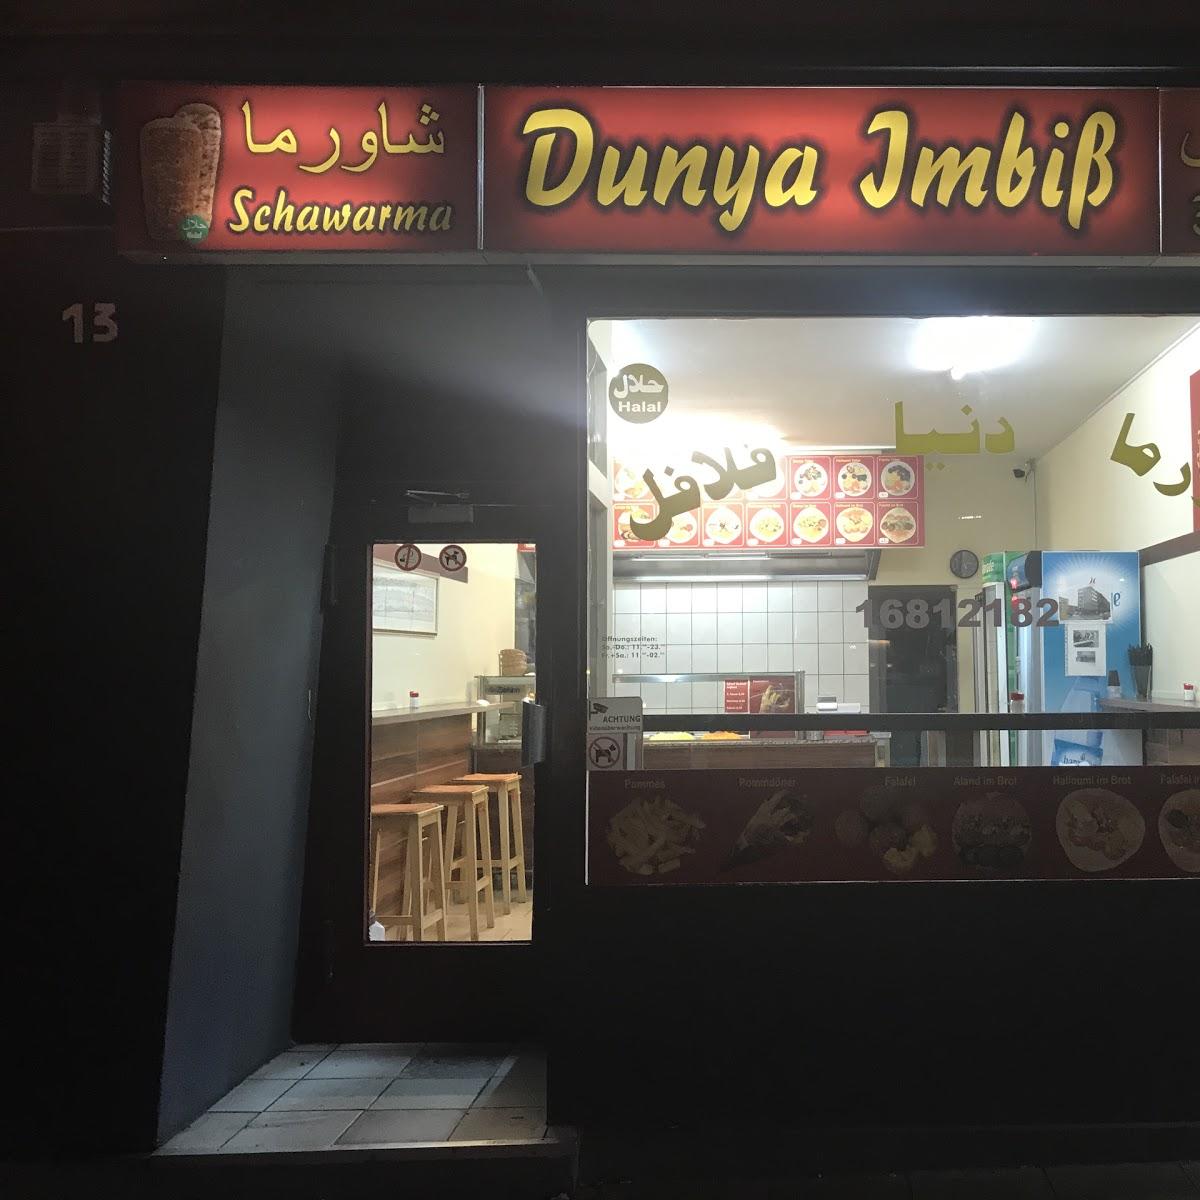 Restaurant "Dunya Imbiss" in Köln